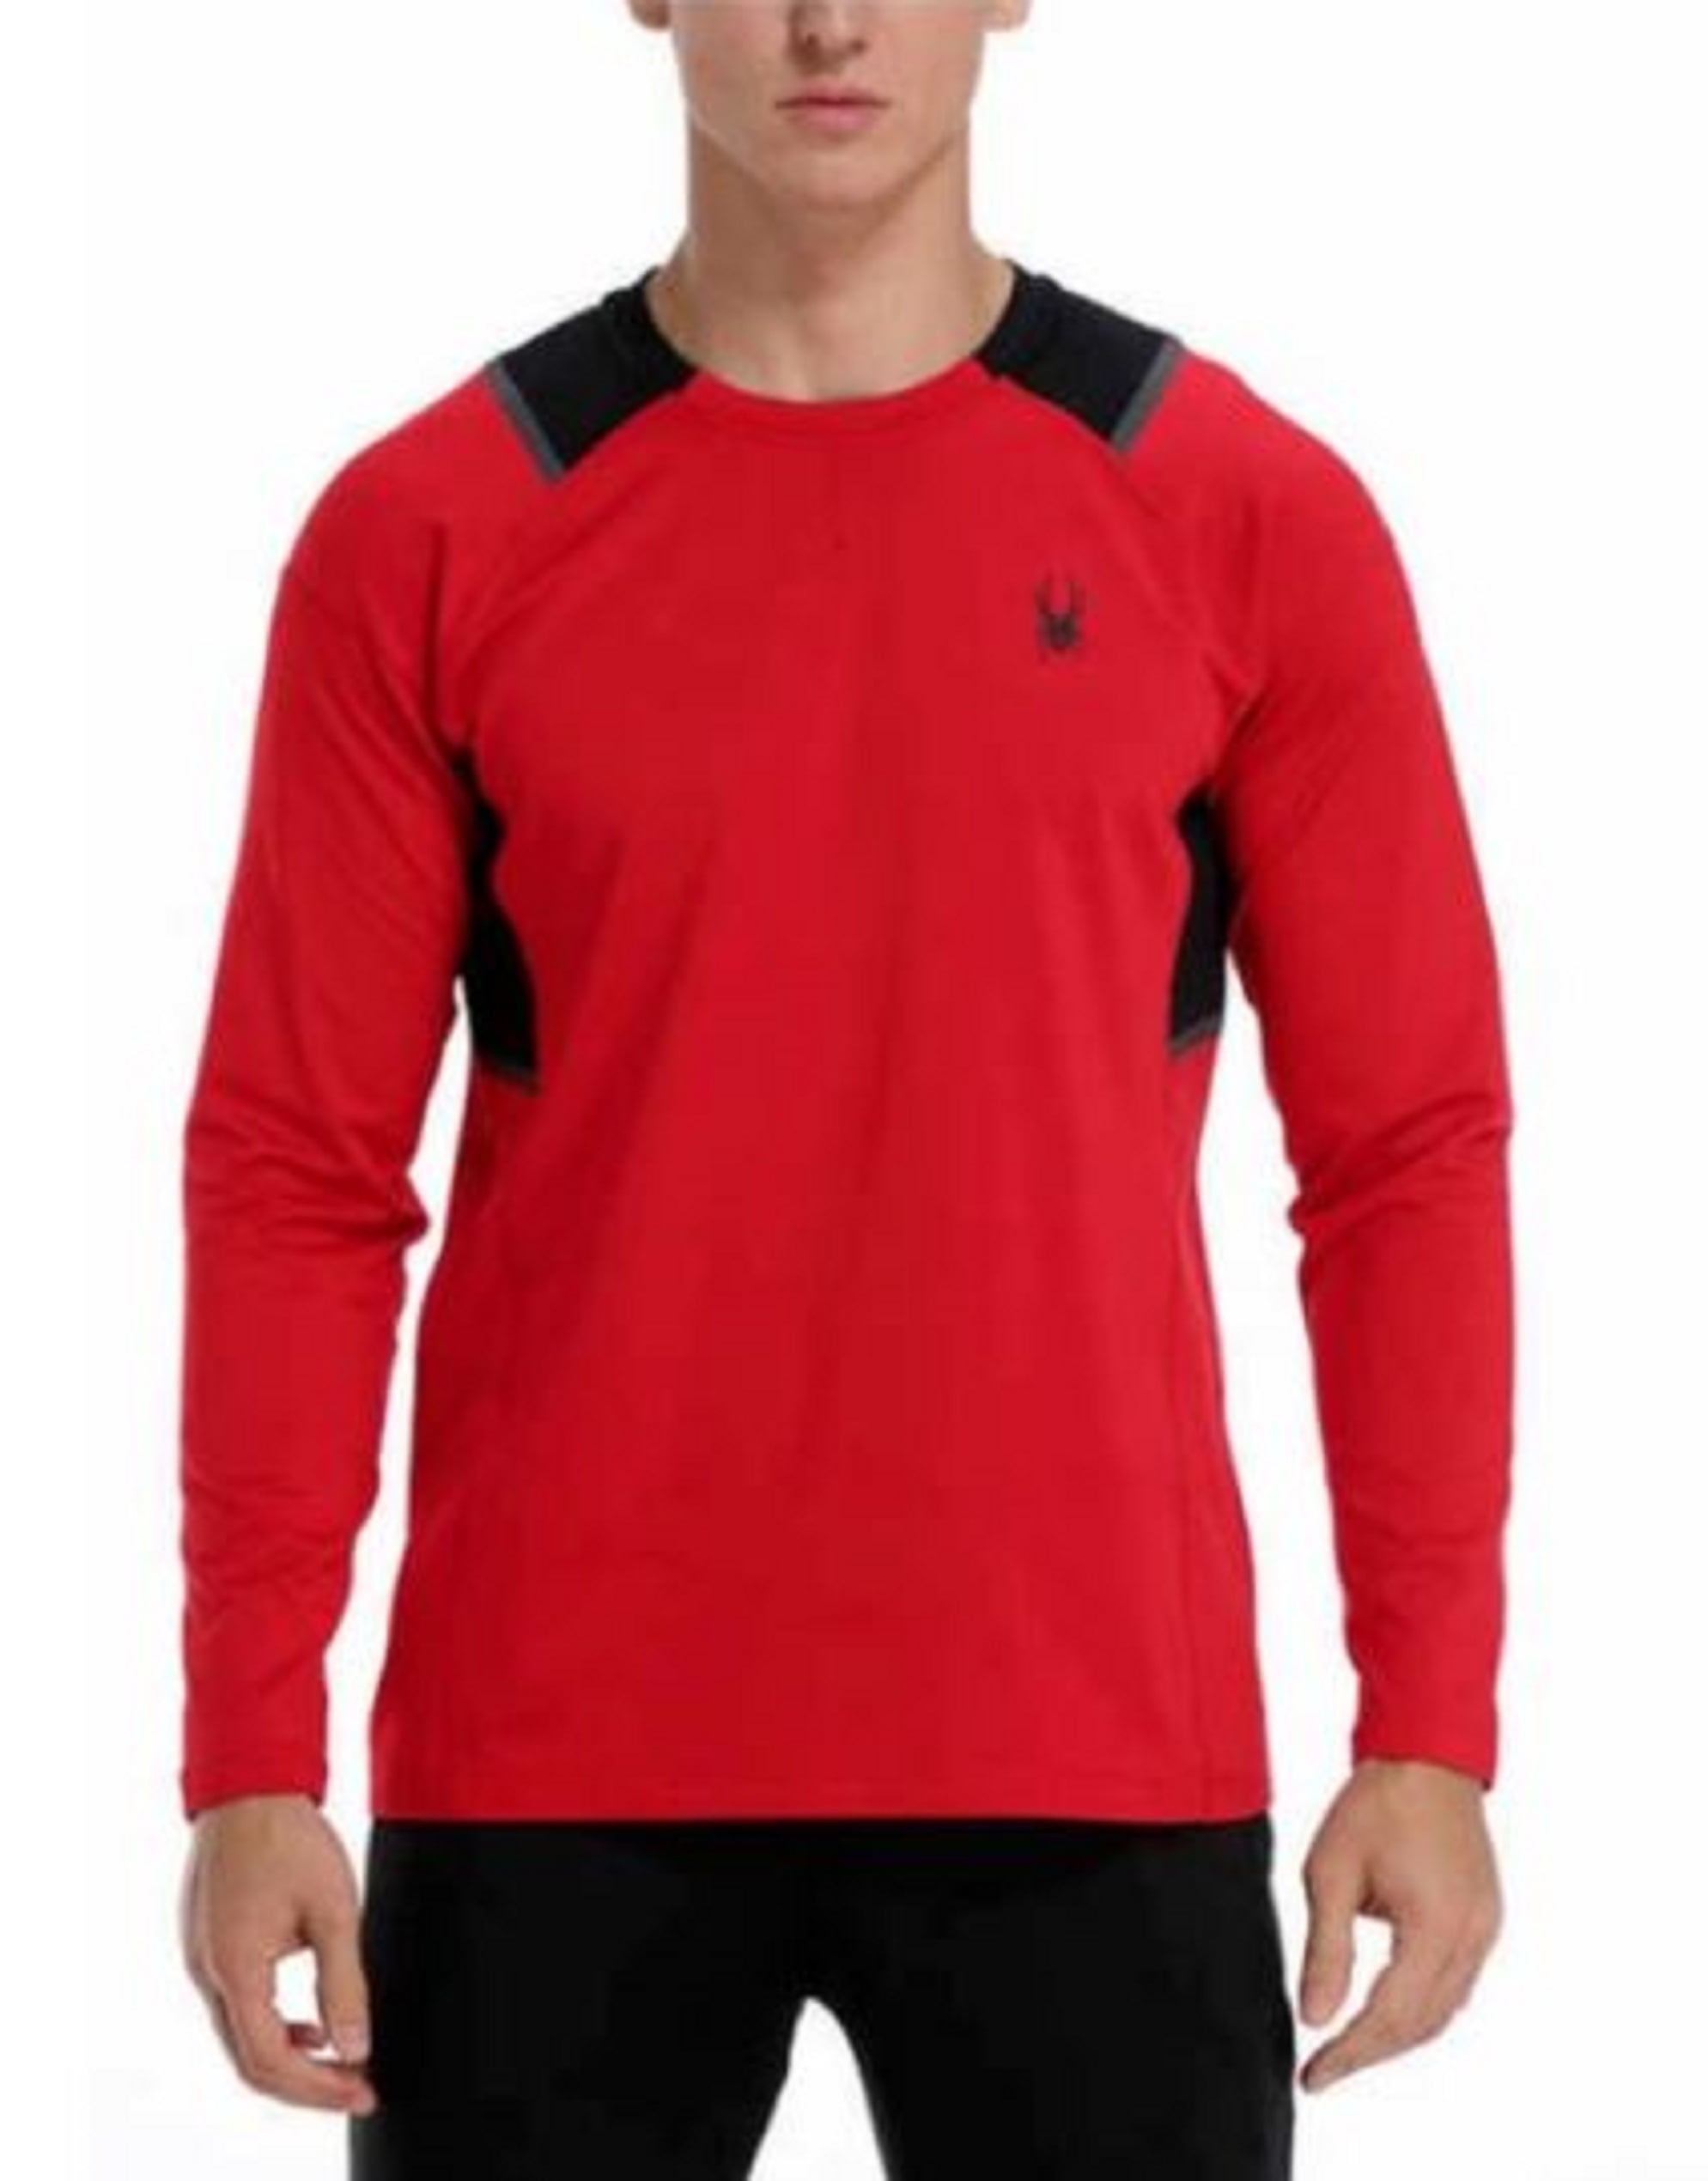 SPYDER Men's Active Long Sleeve Shirt Red Black XX-Large 